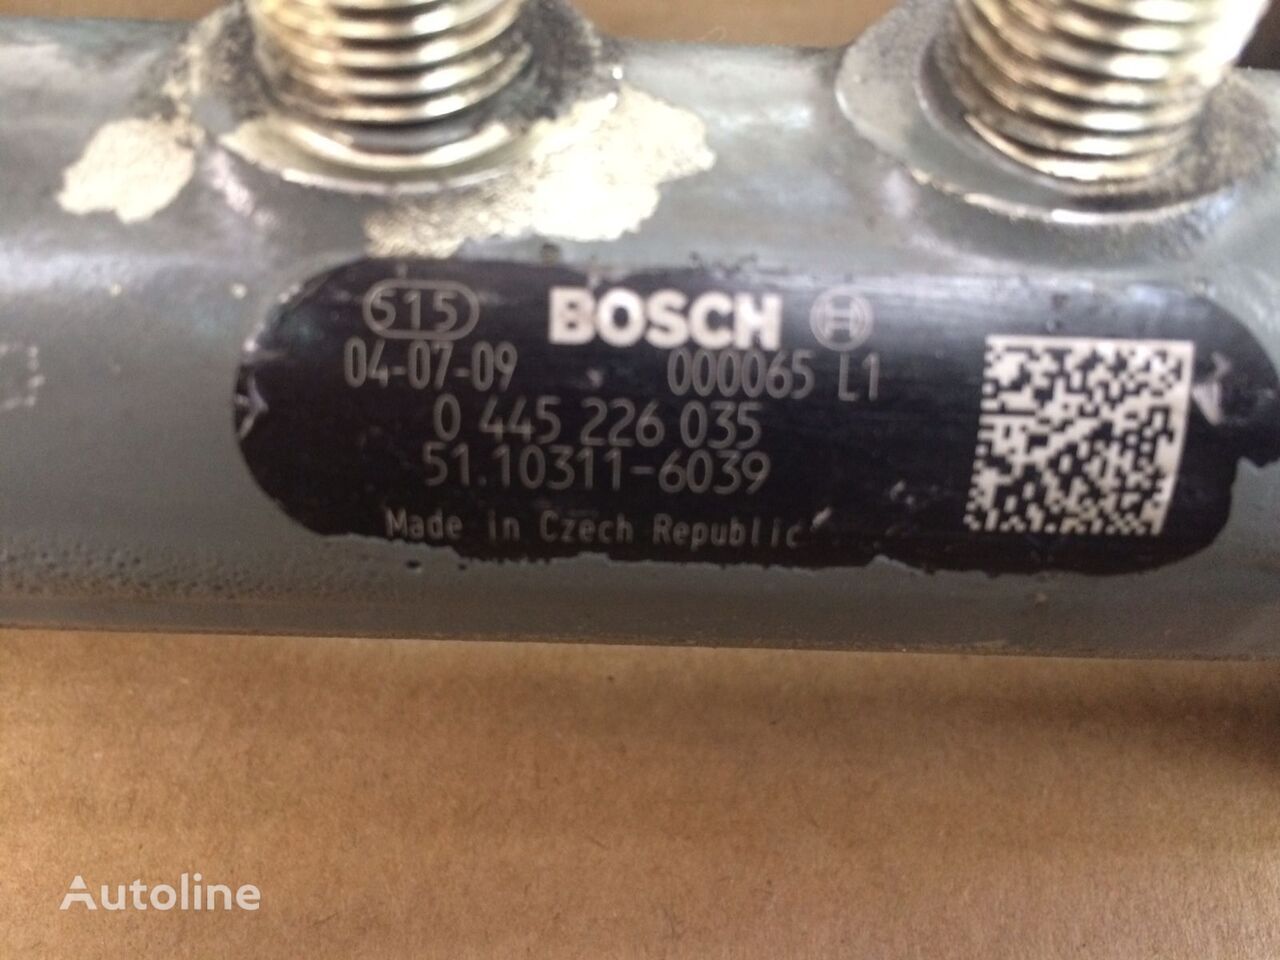 Befecskendező szelep - Teherautó Bosch - TUBO PRESSIONE COMMON RAIL BOSCH   MAN: 6 kép.